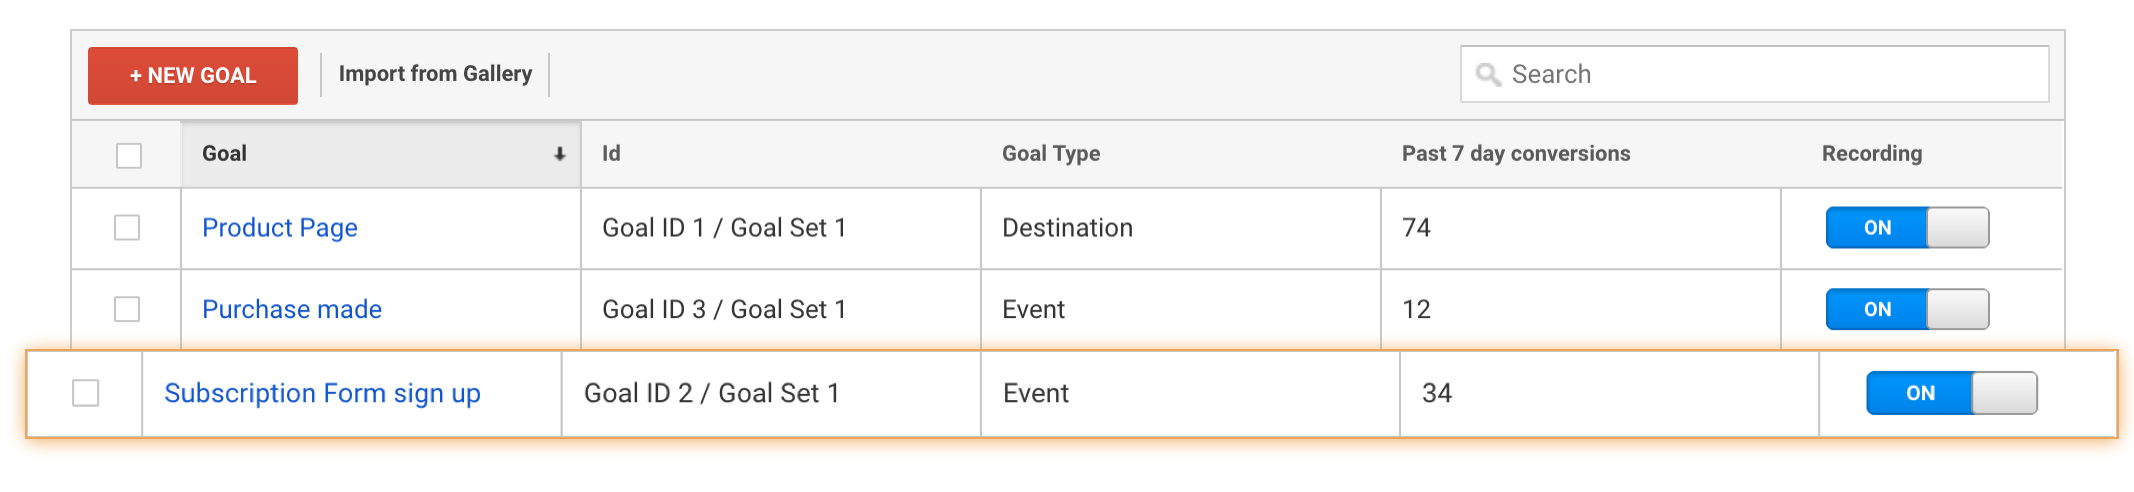 campaign goals in Google Analytics